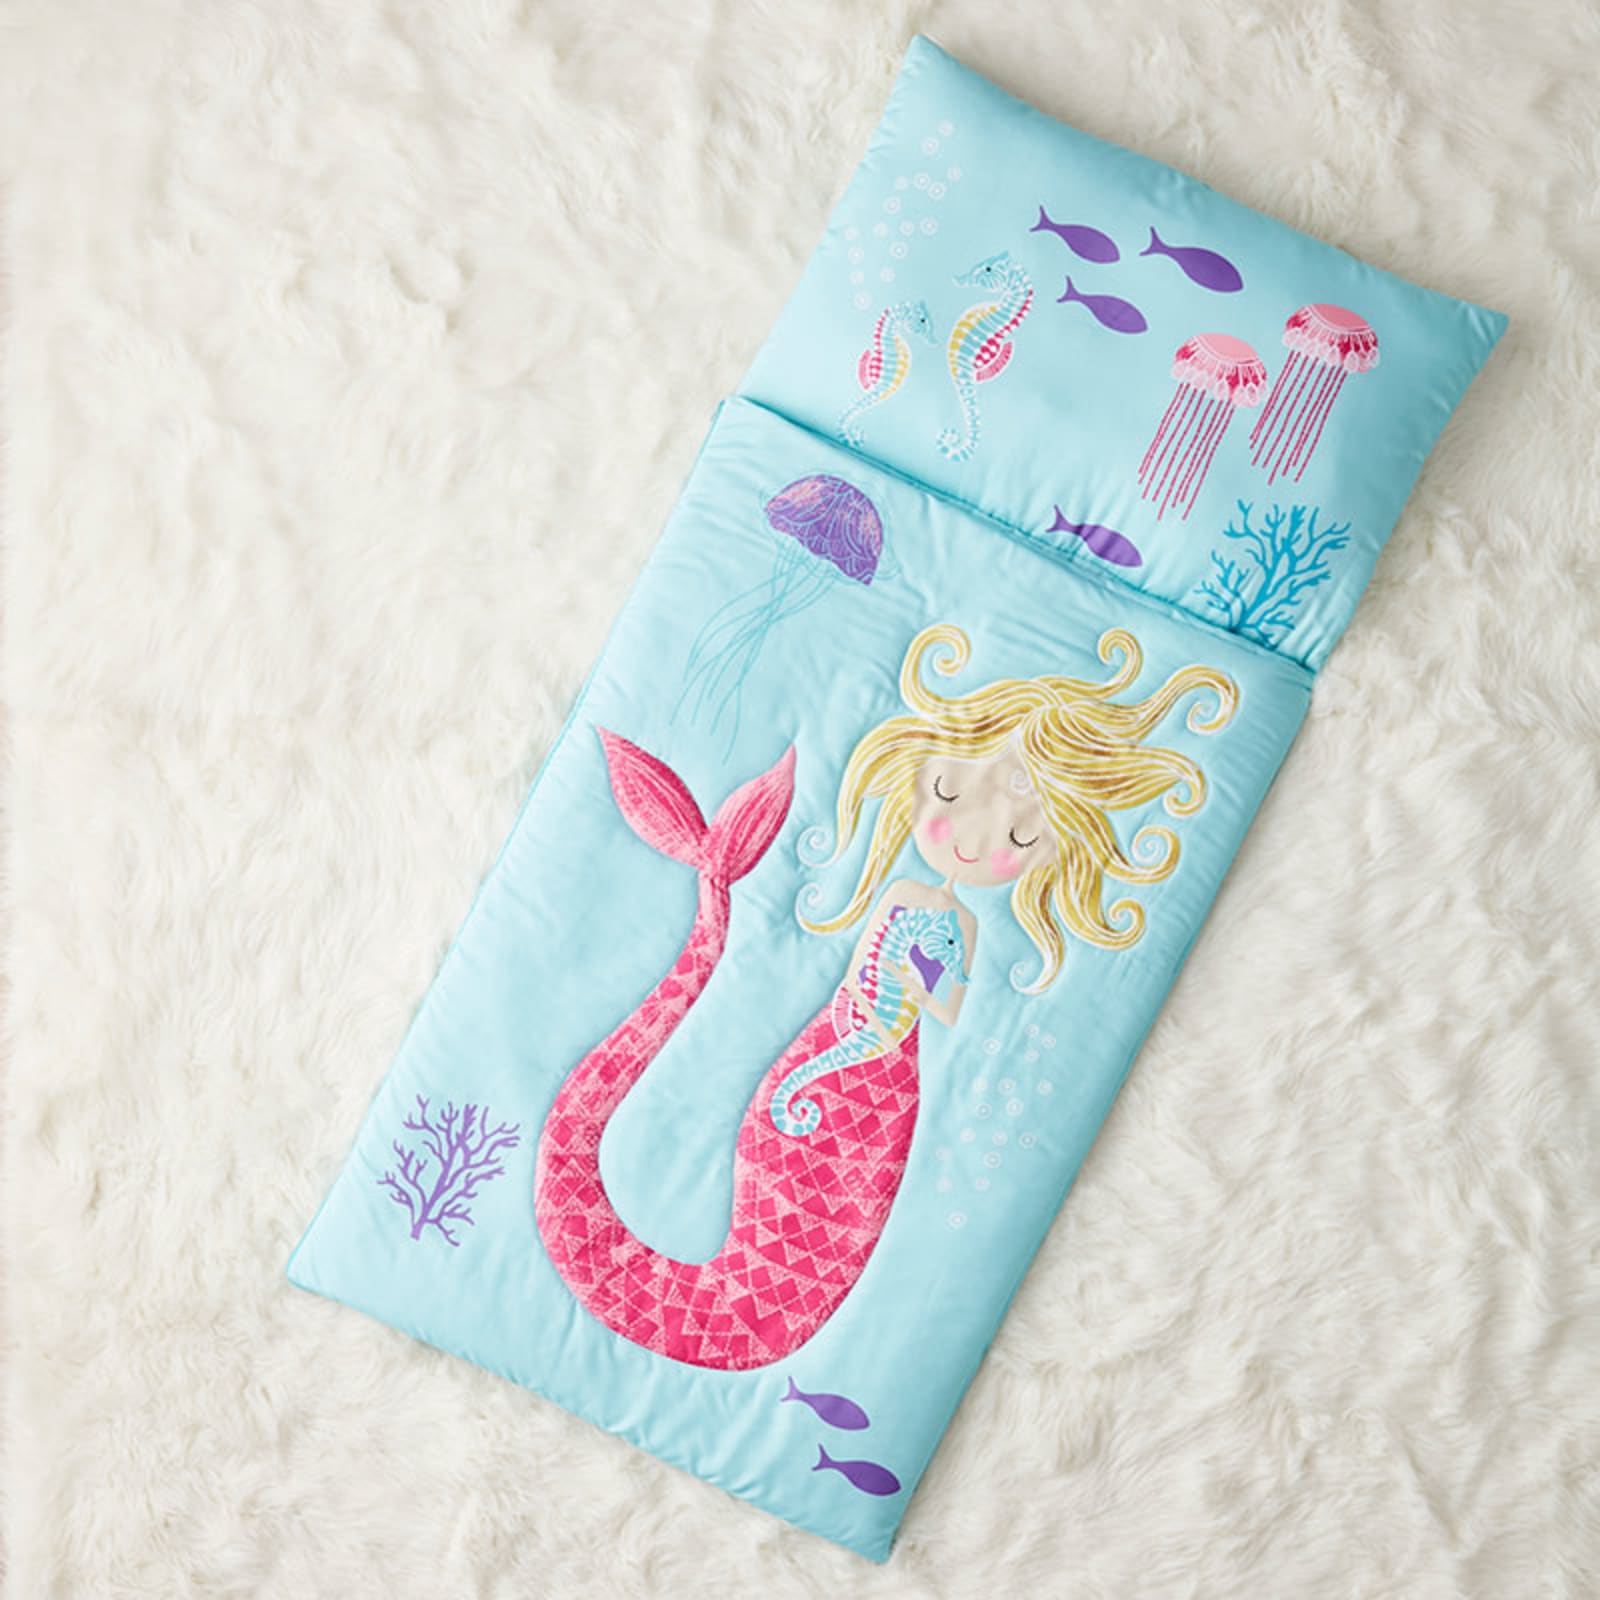 The Cutest Mermaid Sports Towel